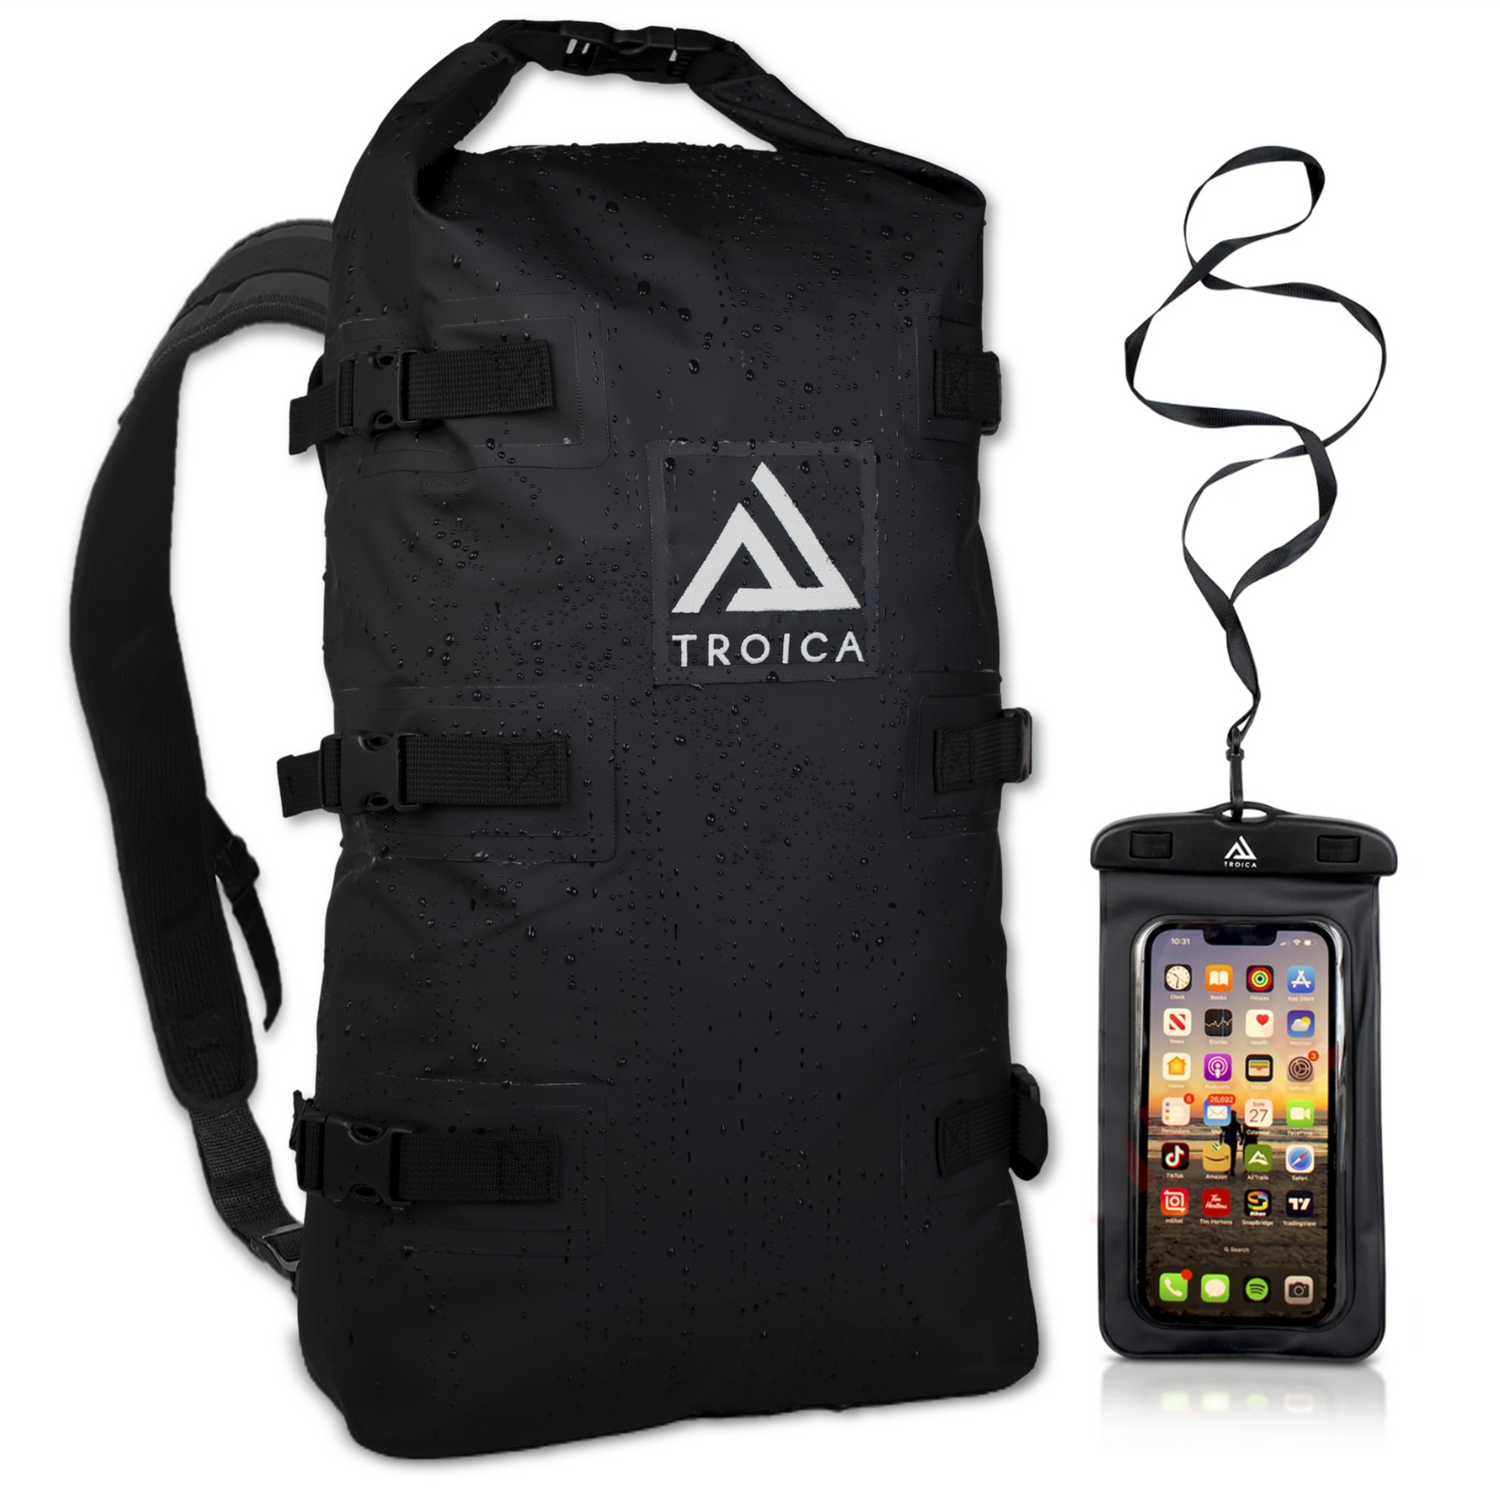 Troica waterproof dry backpack with waterproof cellphone case